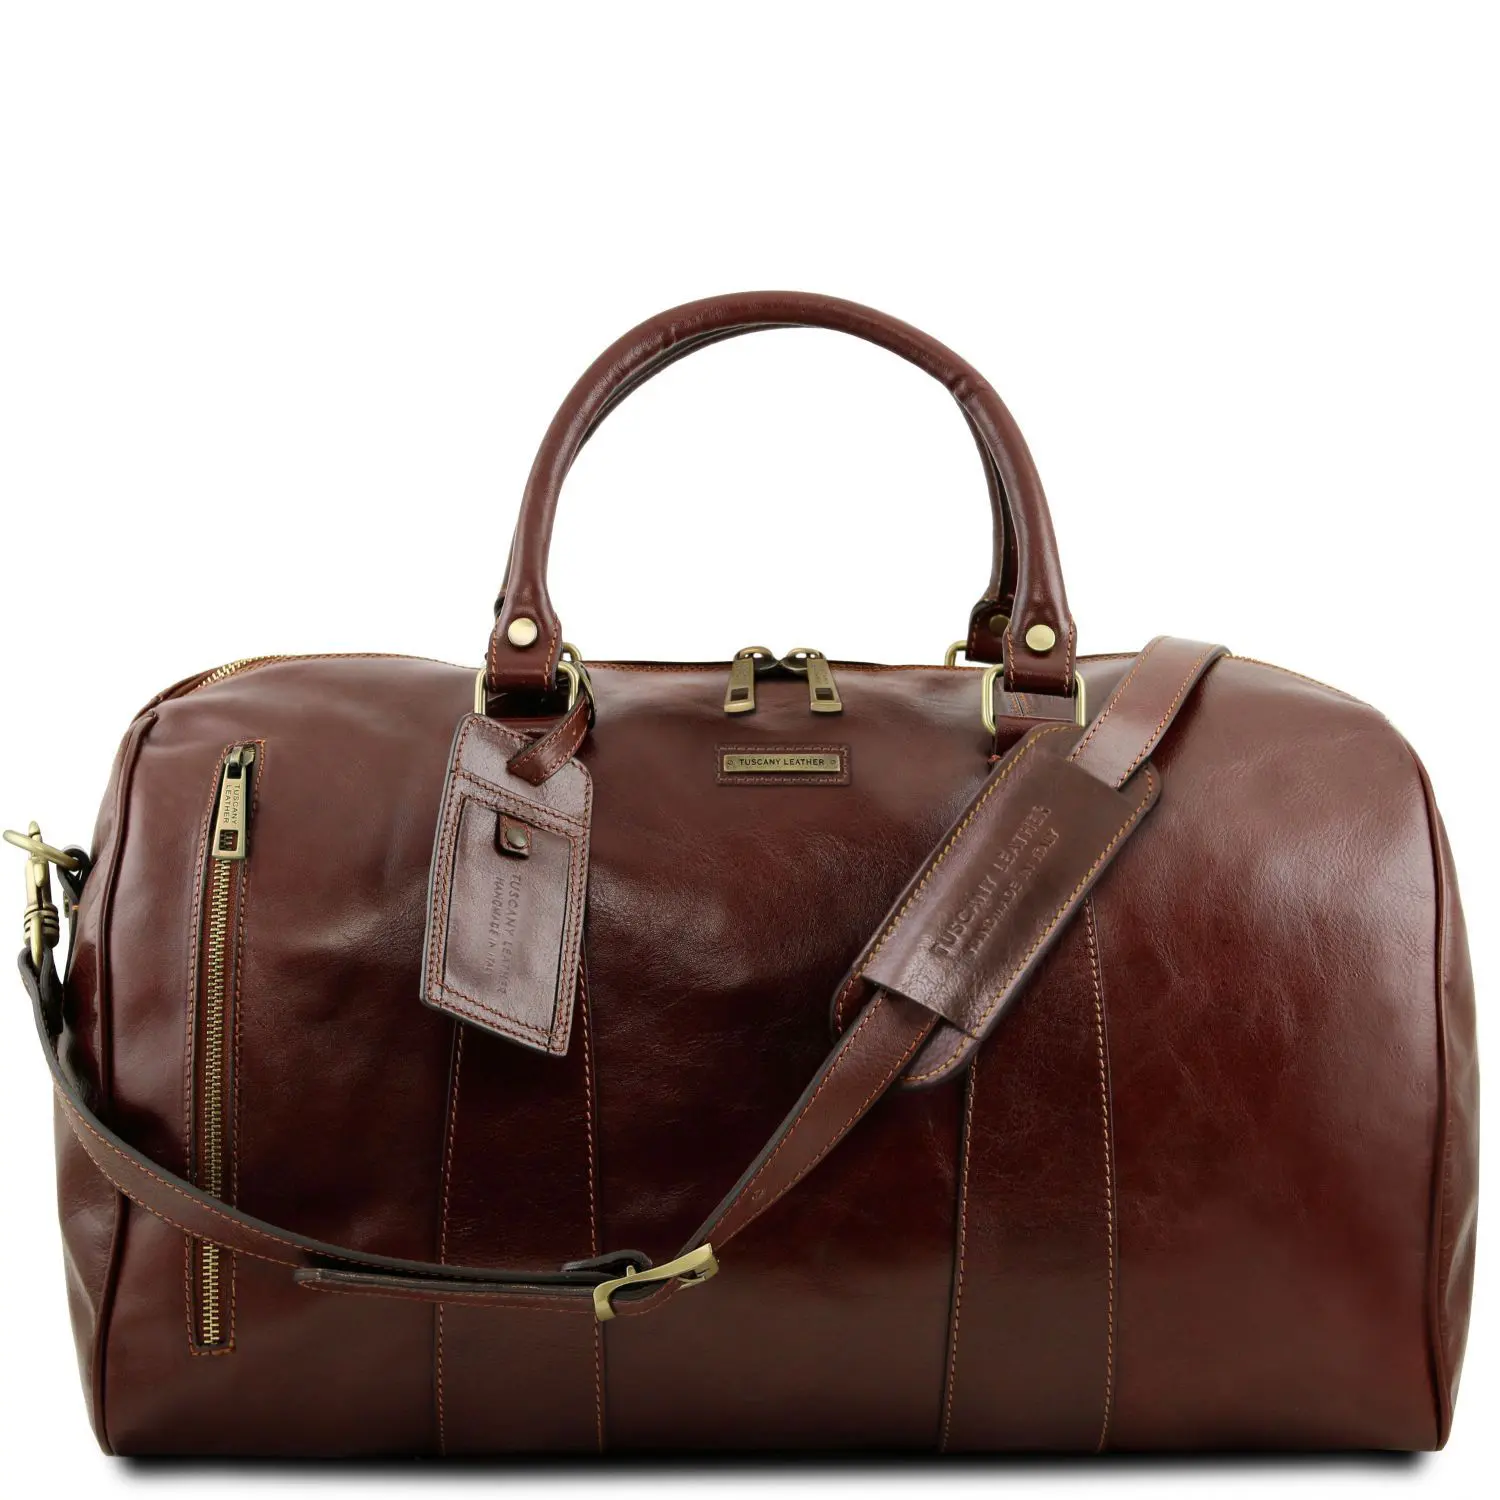 light leather travel bag